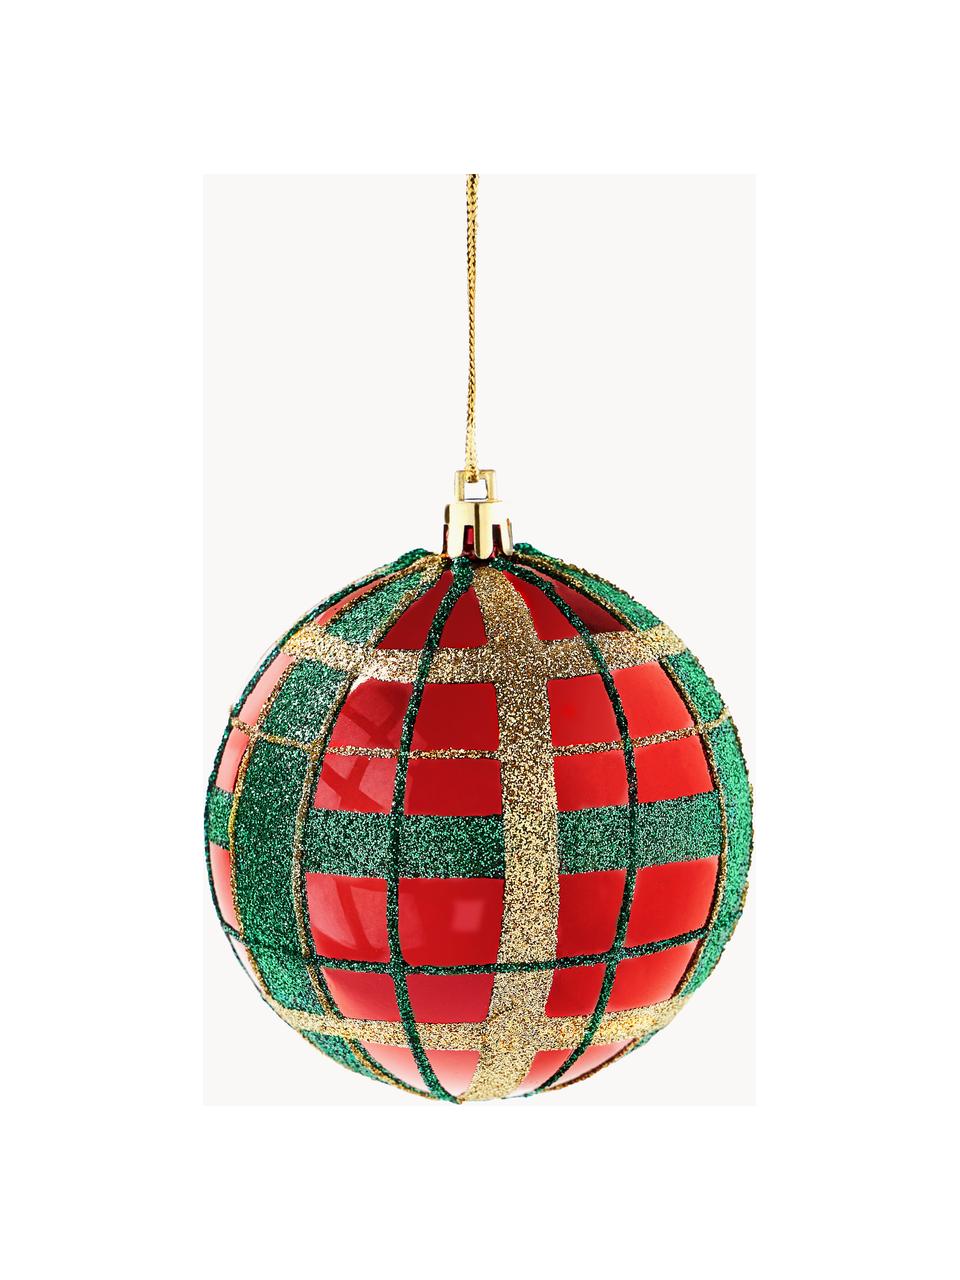 Palline di Natale infrangibile Karo 12 pz, Plastica, Rosso, verde, dorato, Ø 8 cm